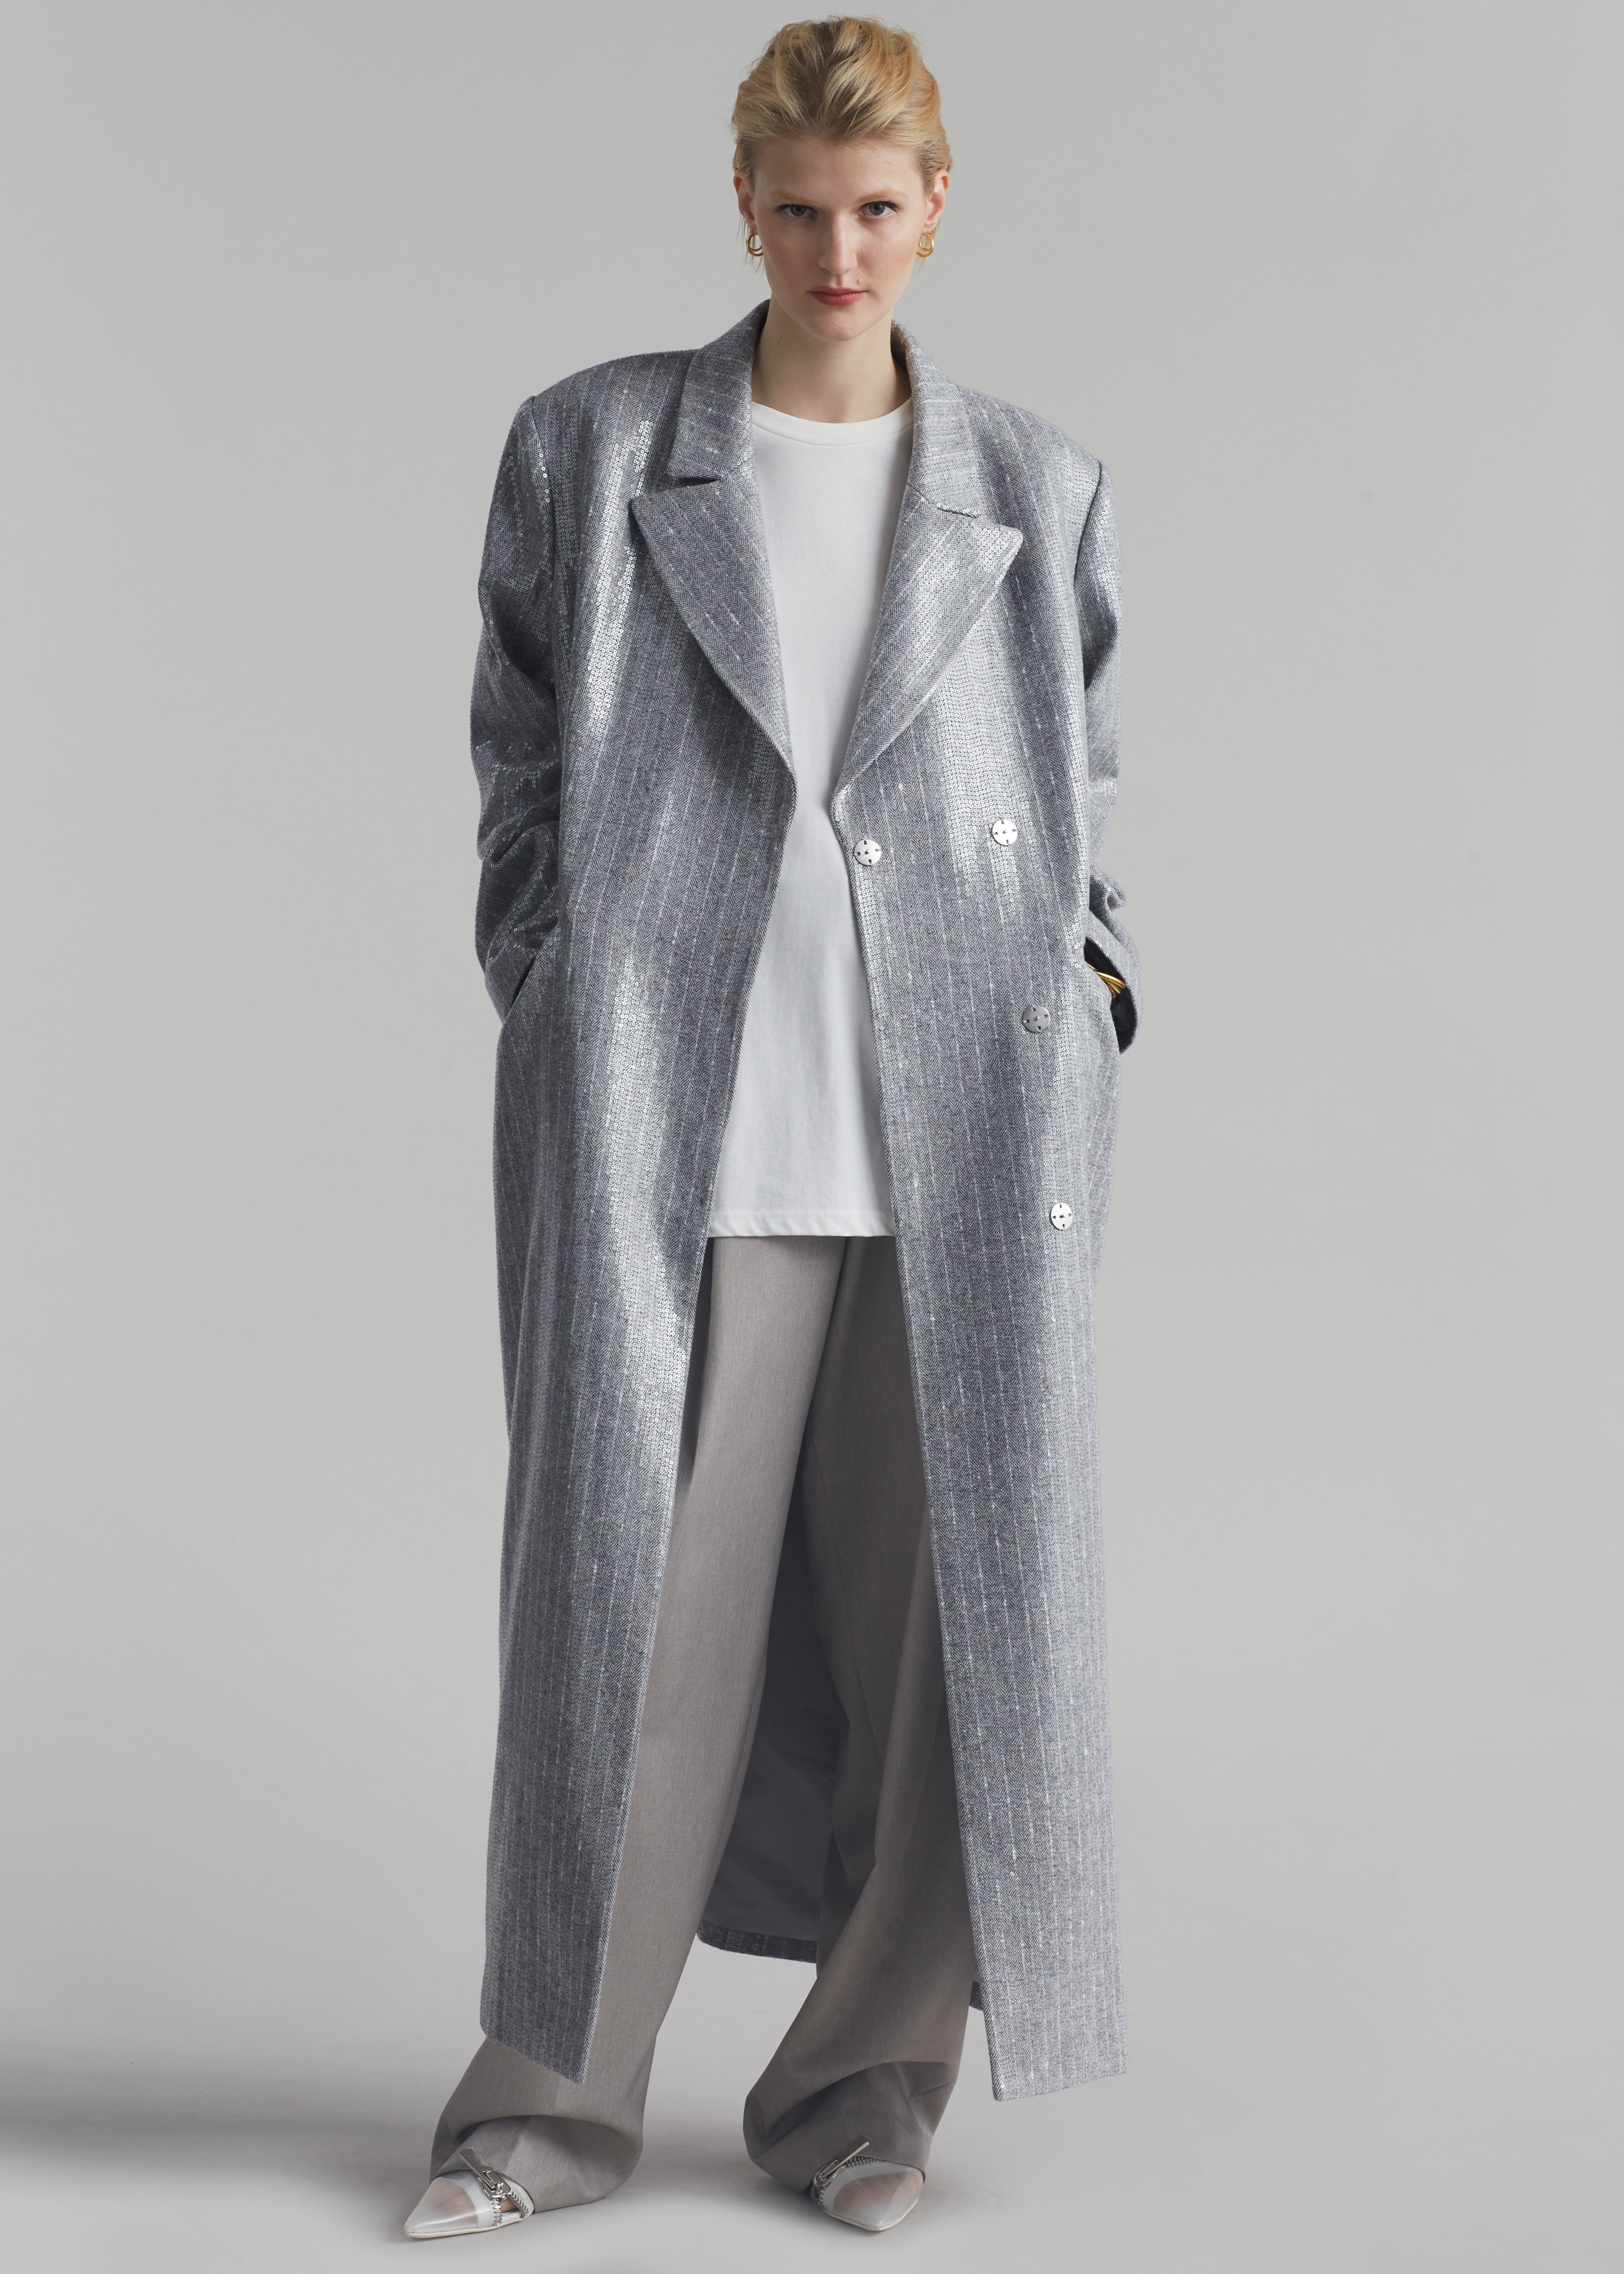 Jennifer Sequins Coat - Grey/White Stripe - 1